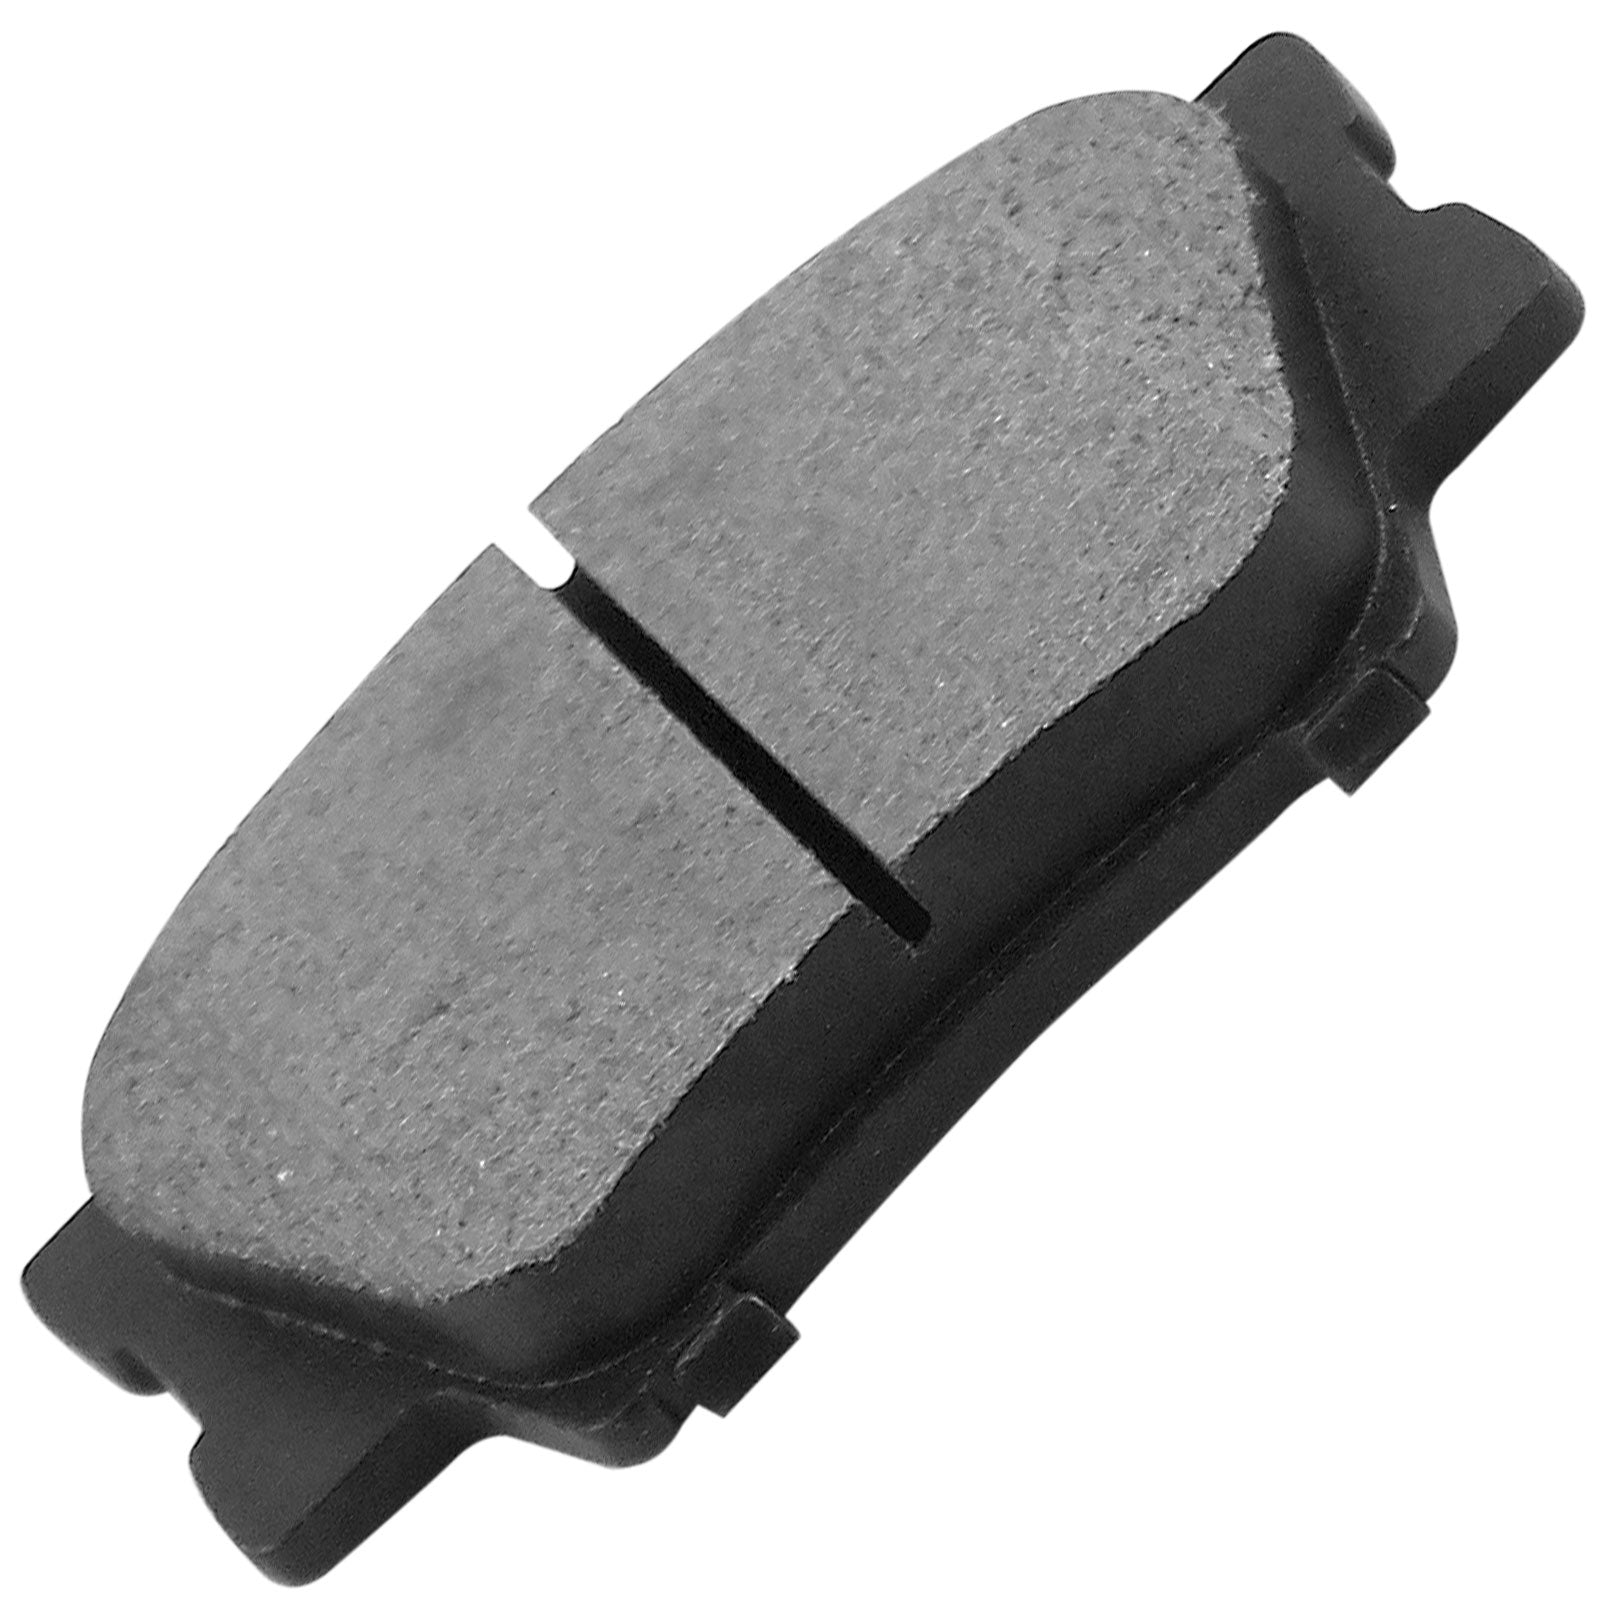 Rear Ceramic Brake Pads w/Hardware Kits Fits for Lexus ES300h ES350 HS250h, Pontiac Vibe, Toyota Camry Matrix RAV4-Low Dust Brake Pad-4 Pack MotorbyMotor